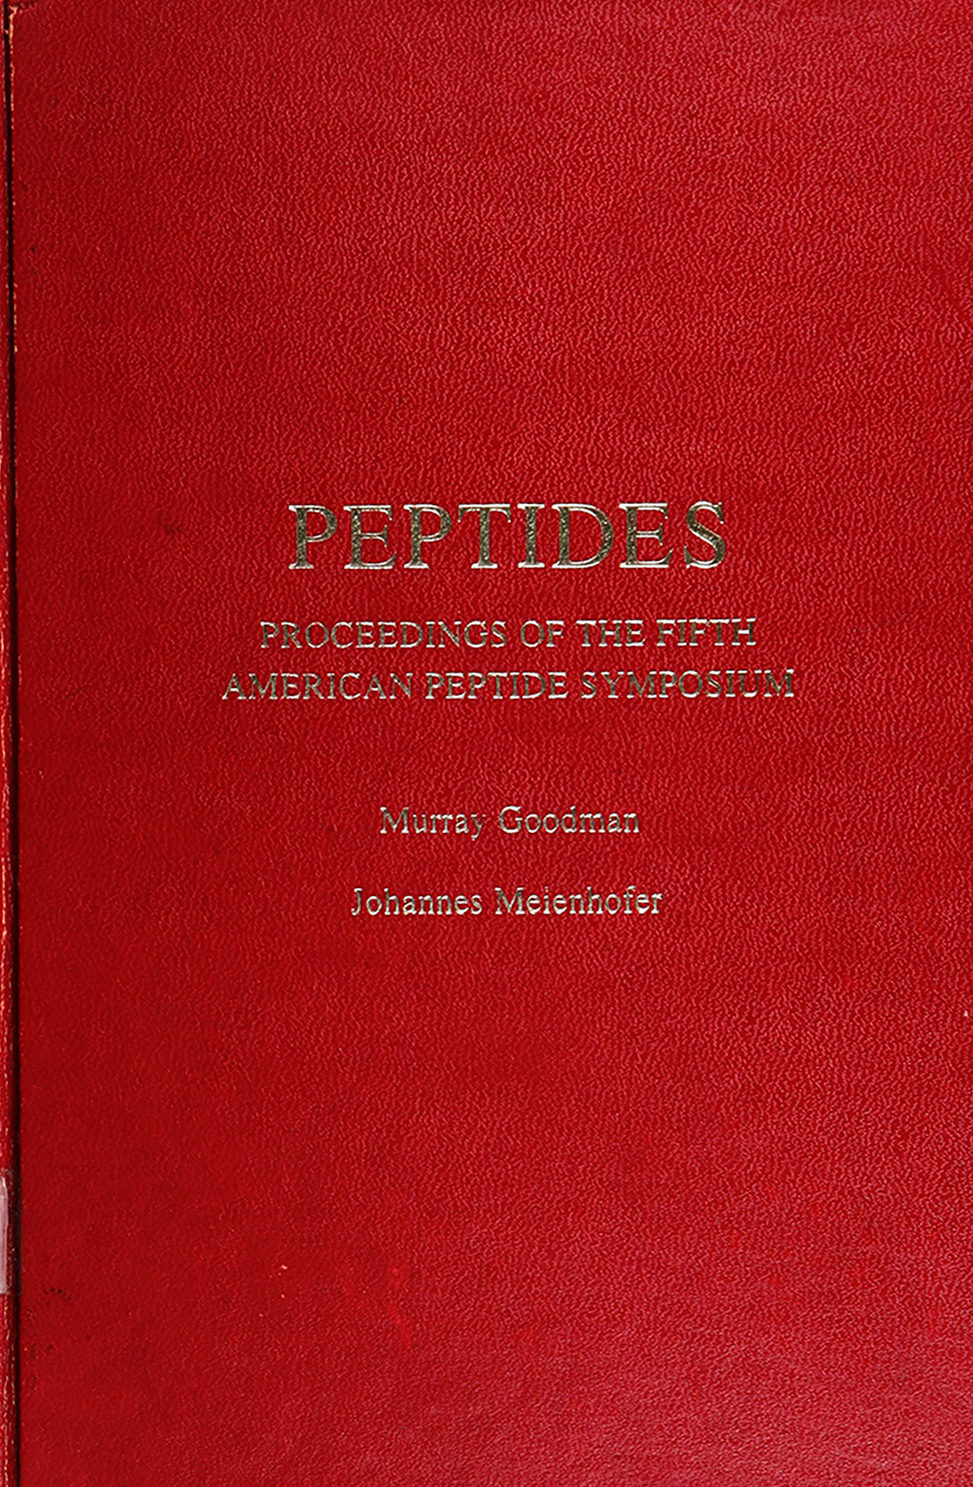 1977 Proceedings Cover